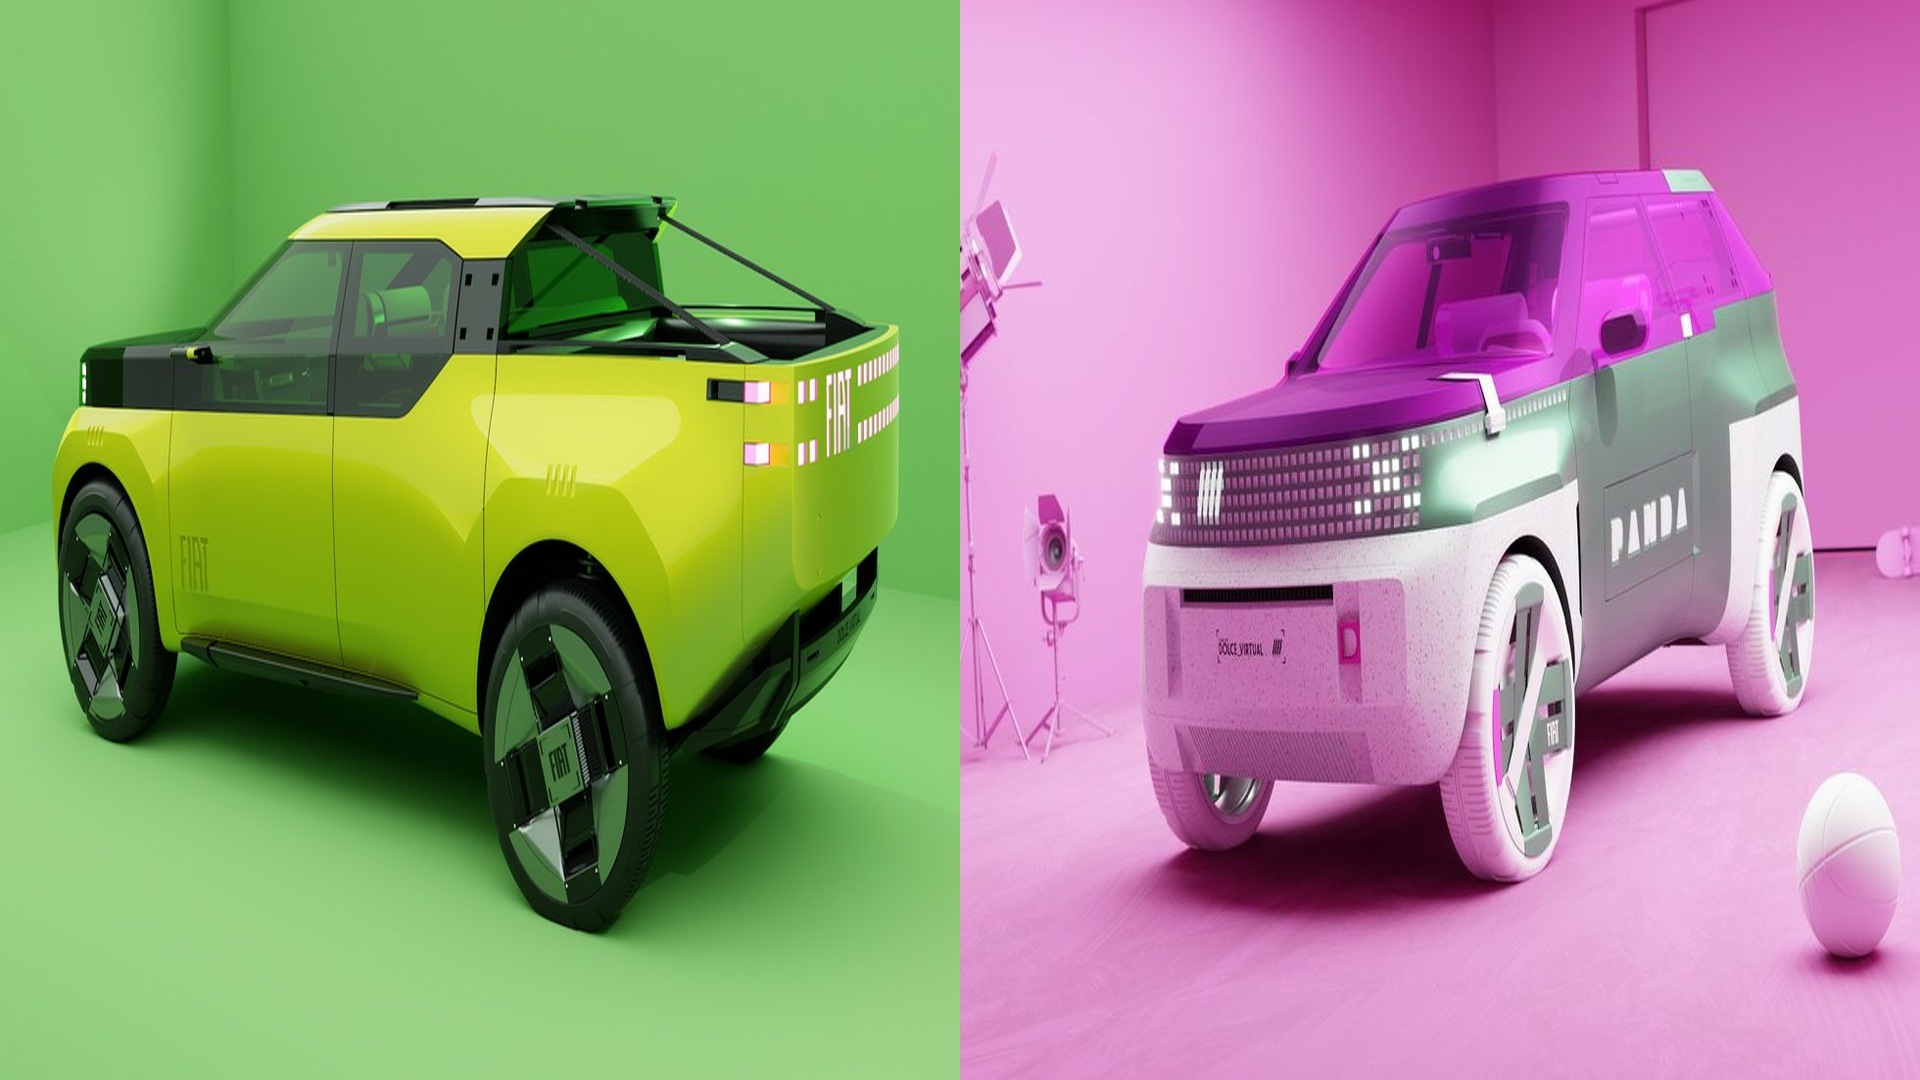 The Panda Pickup Truck (Left) And Pink Panda City Car (Right)